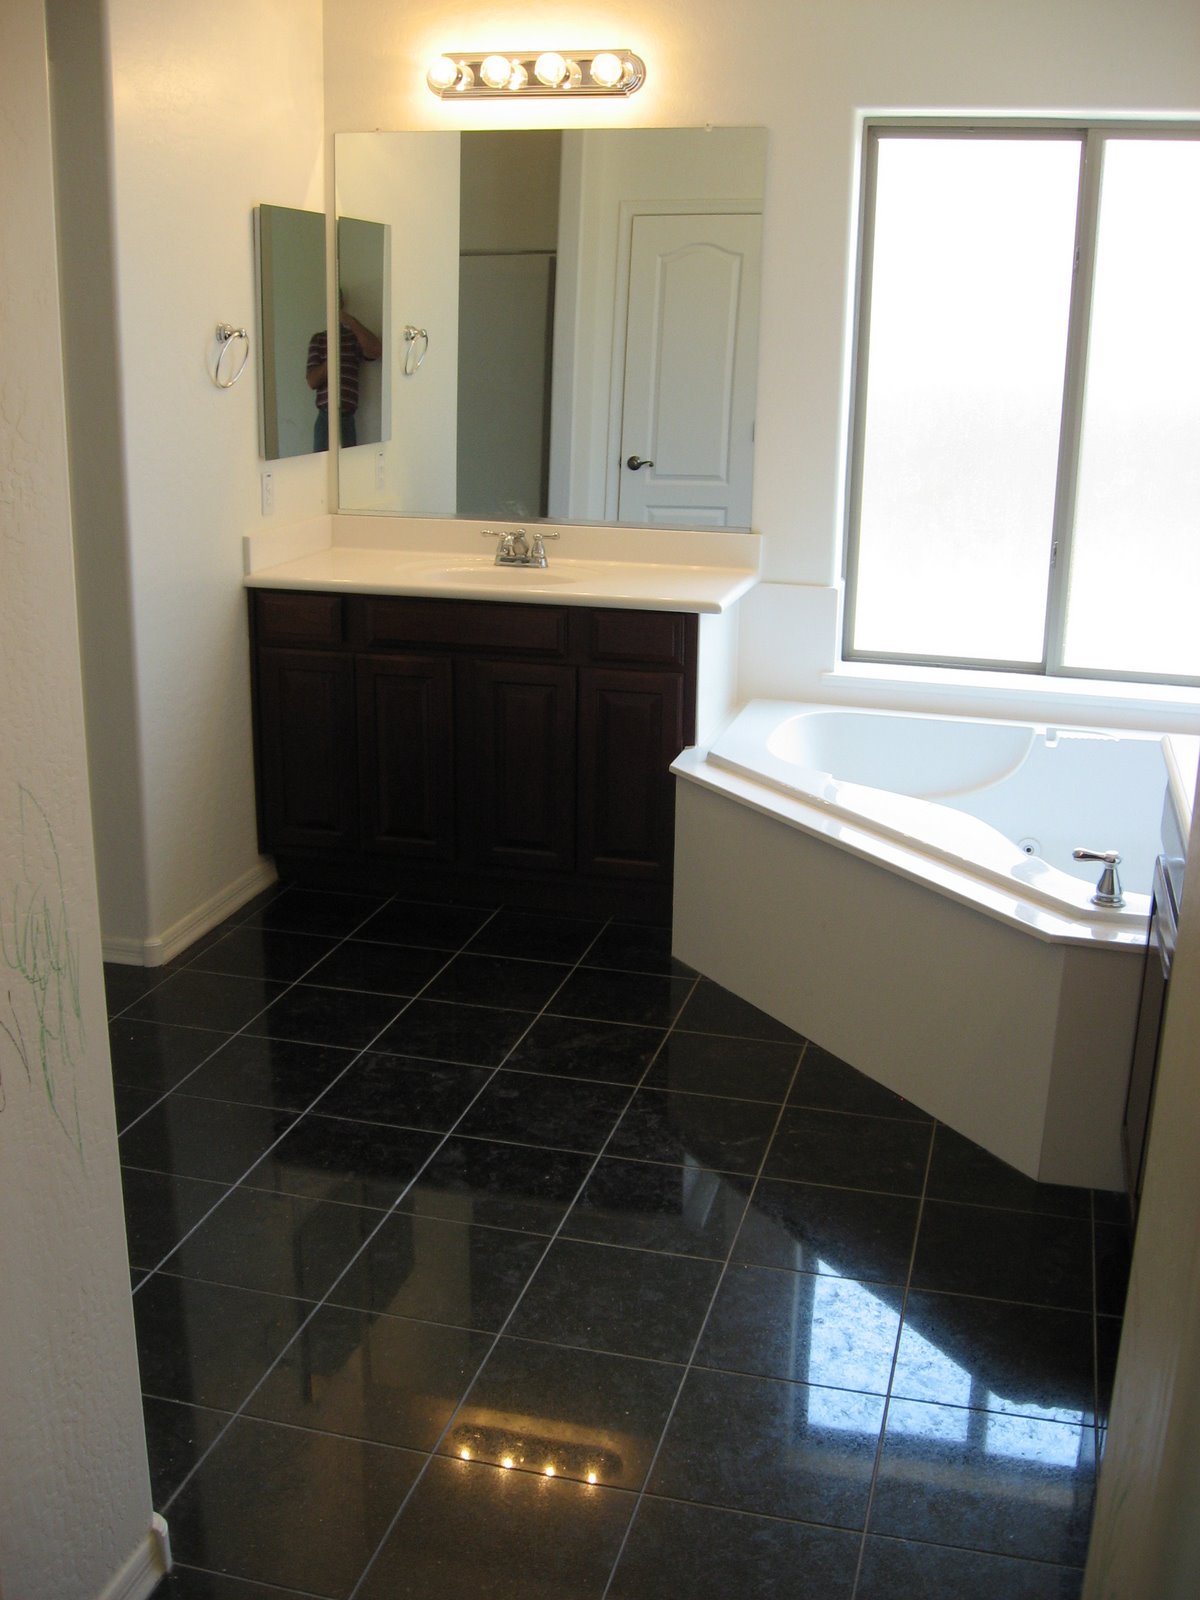 Image result for black granite floor